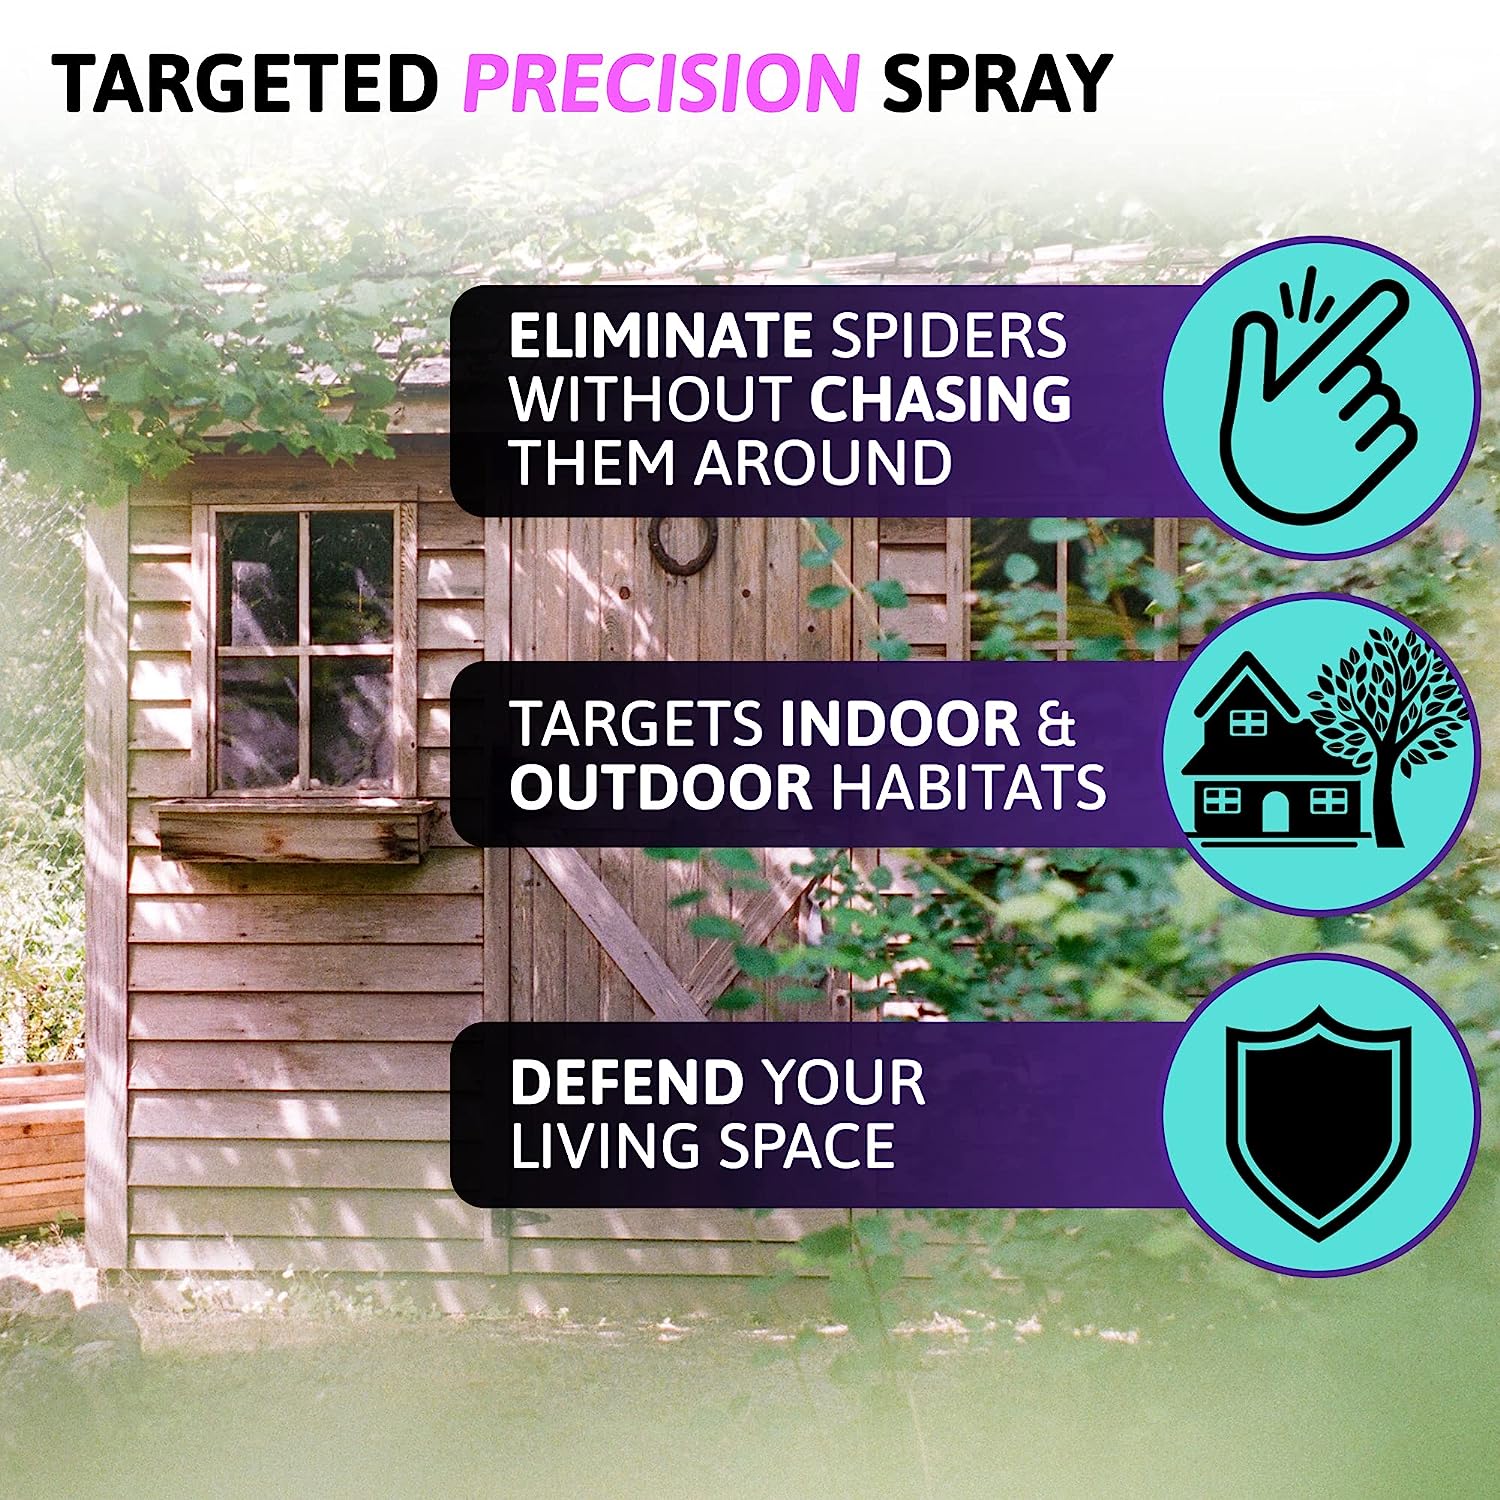 aviro-spider-killer-spray-benefits